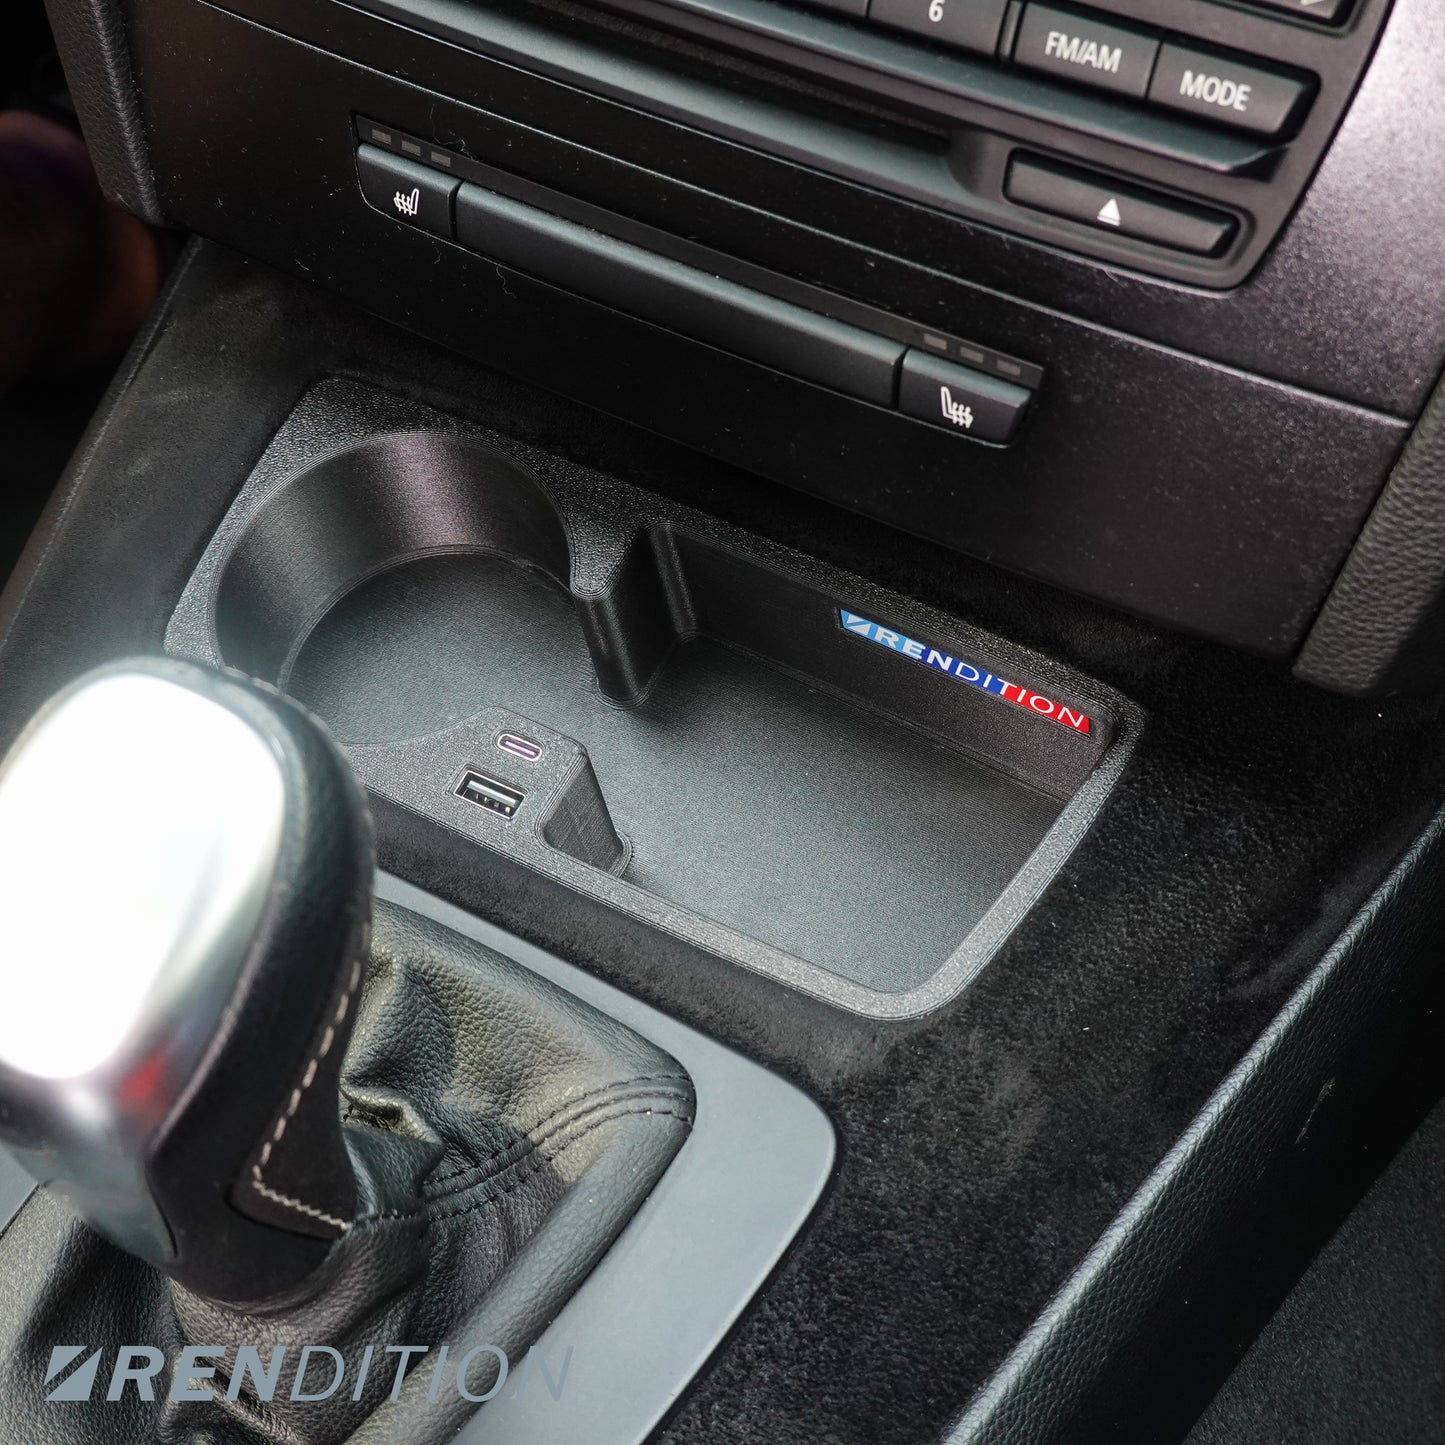 BMW E9X FRONT CUPHOLDER + USB (E90 E91 E92 E93)